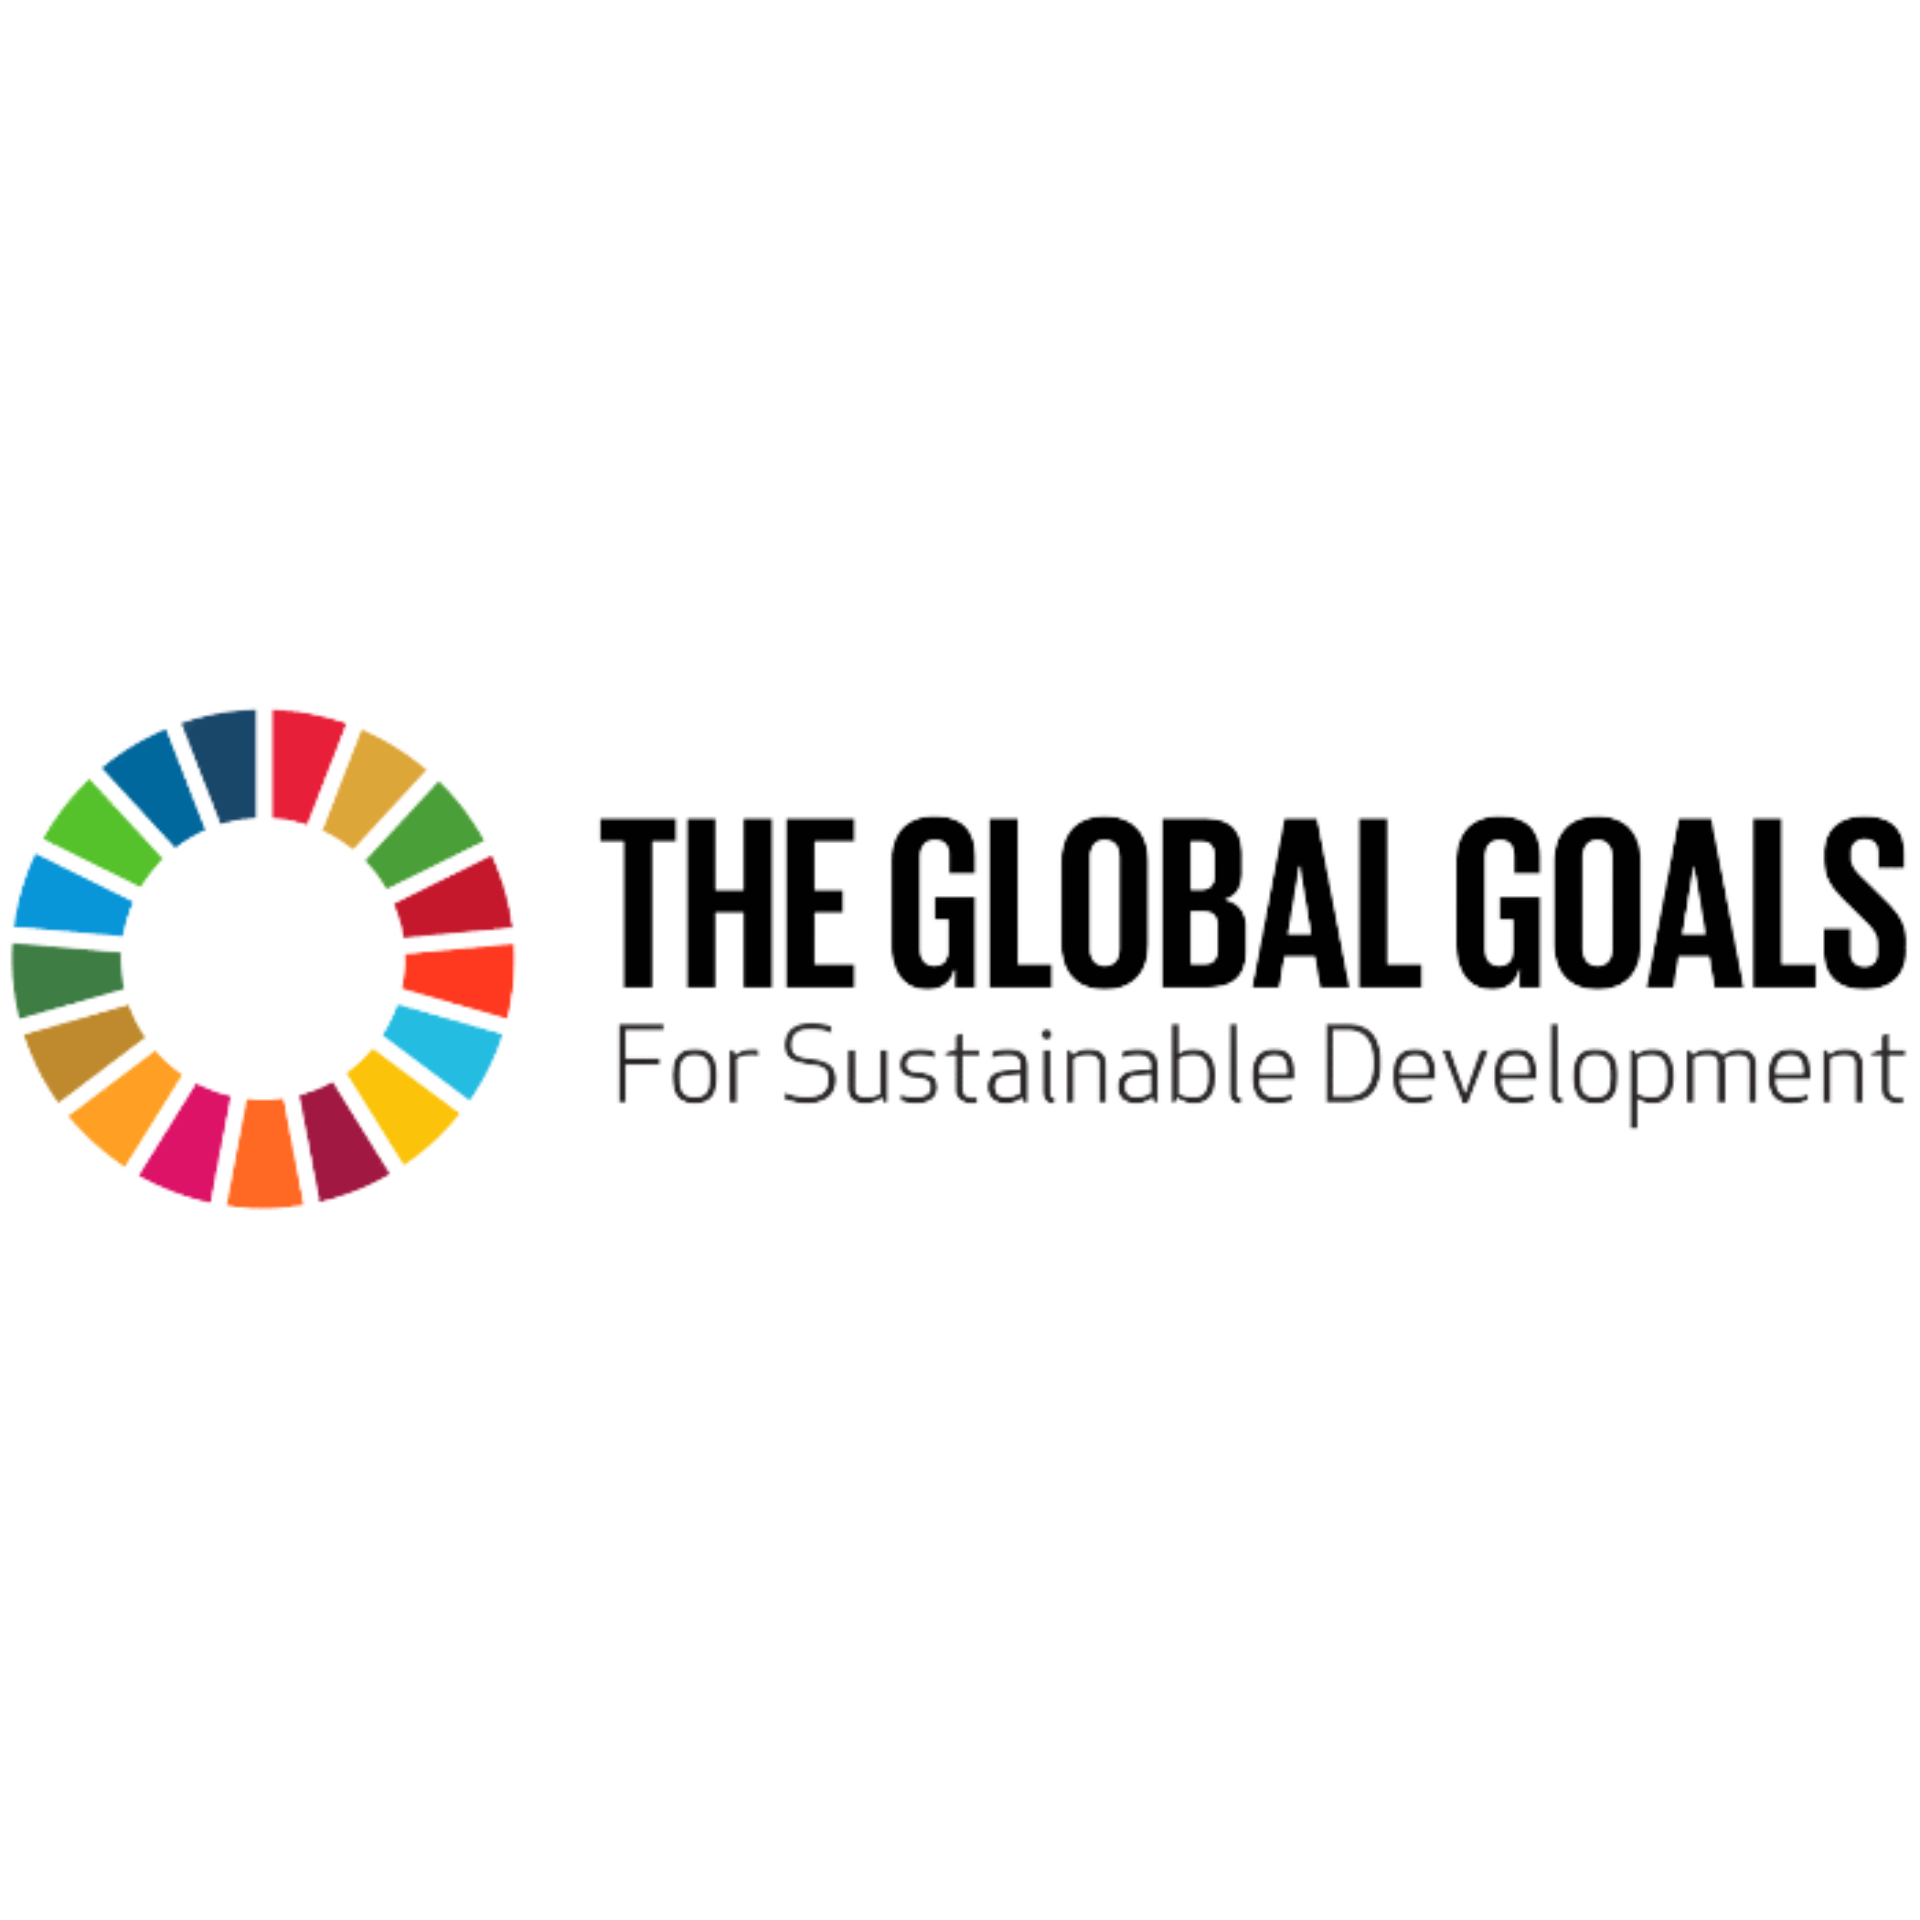 The Global Goals logo.png